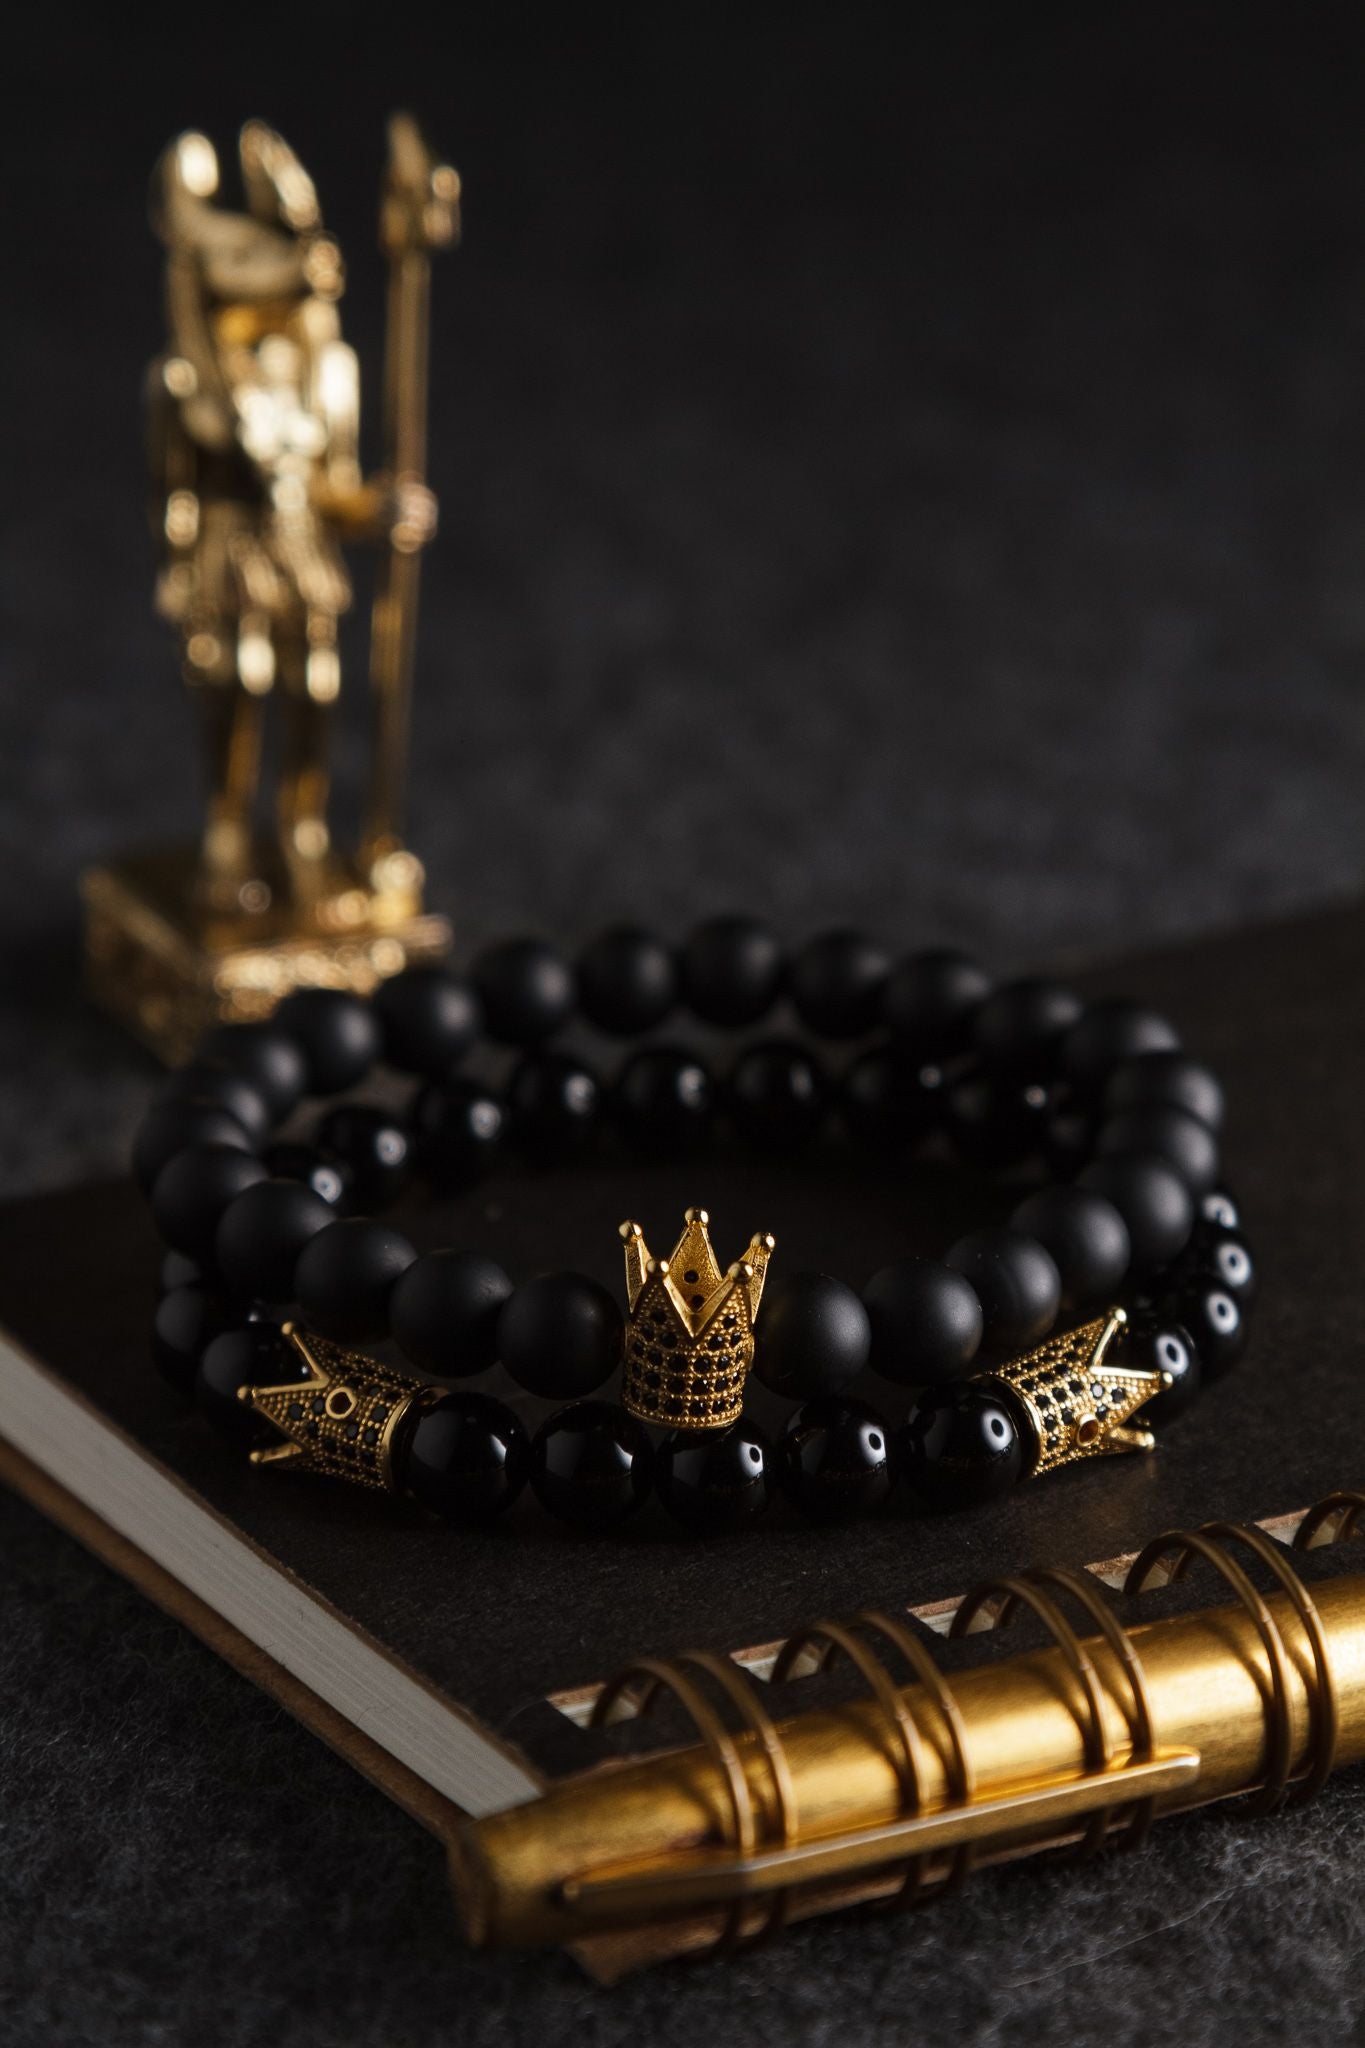 UNCOMMON Men's Beads Bracelet One Gold Jeweled Crown Charm Black Matte Onyx Beads